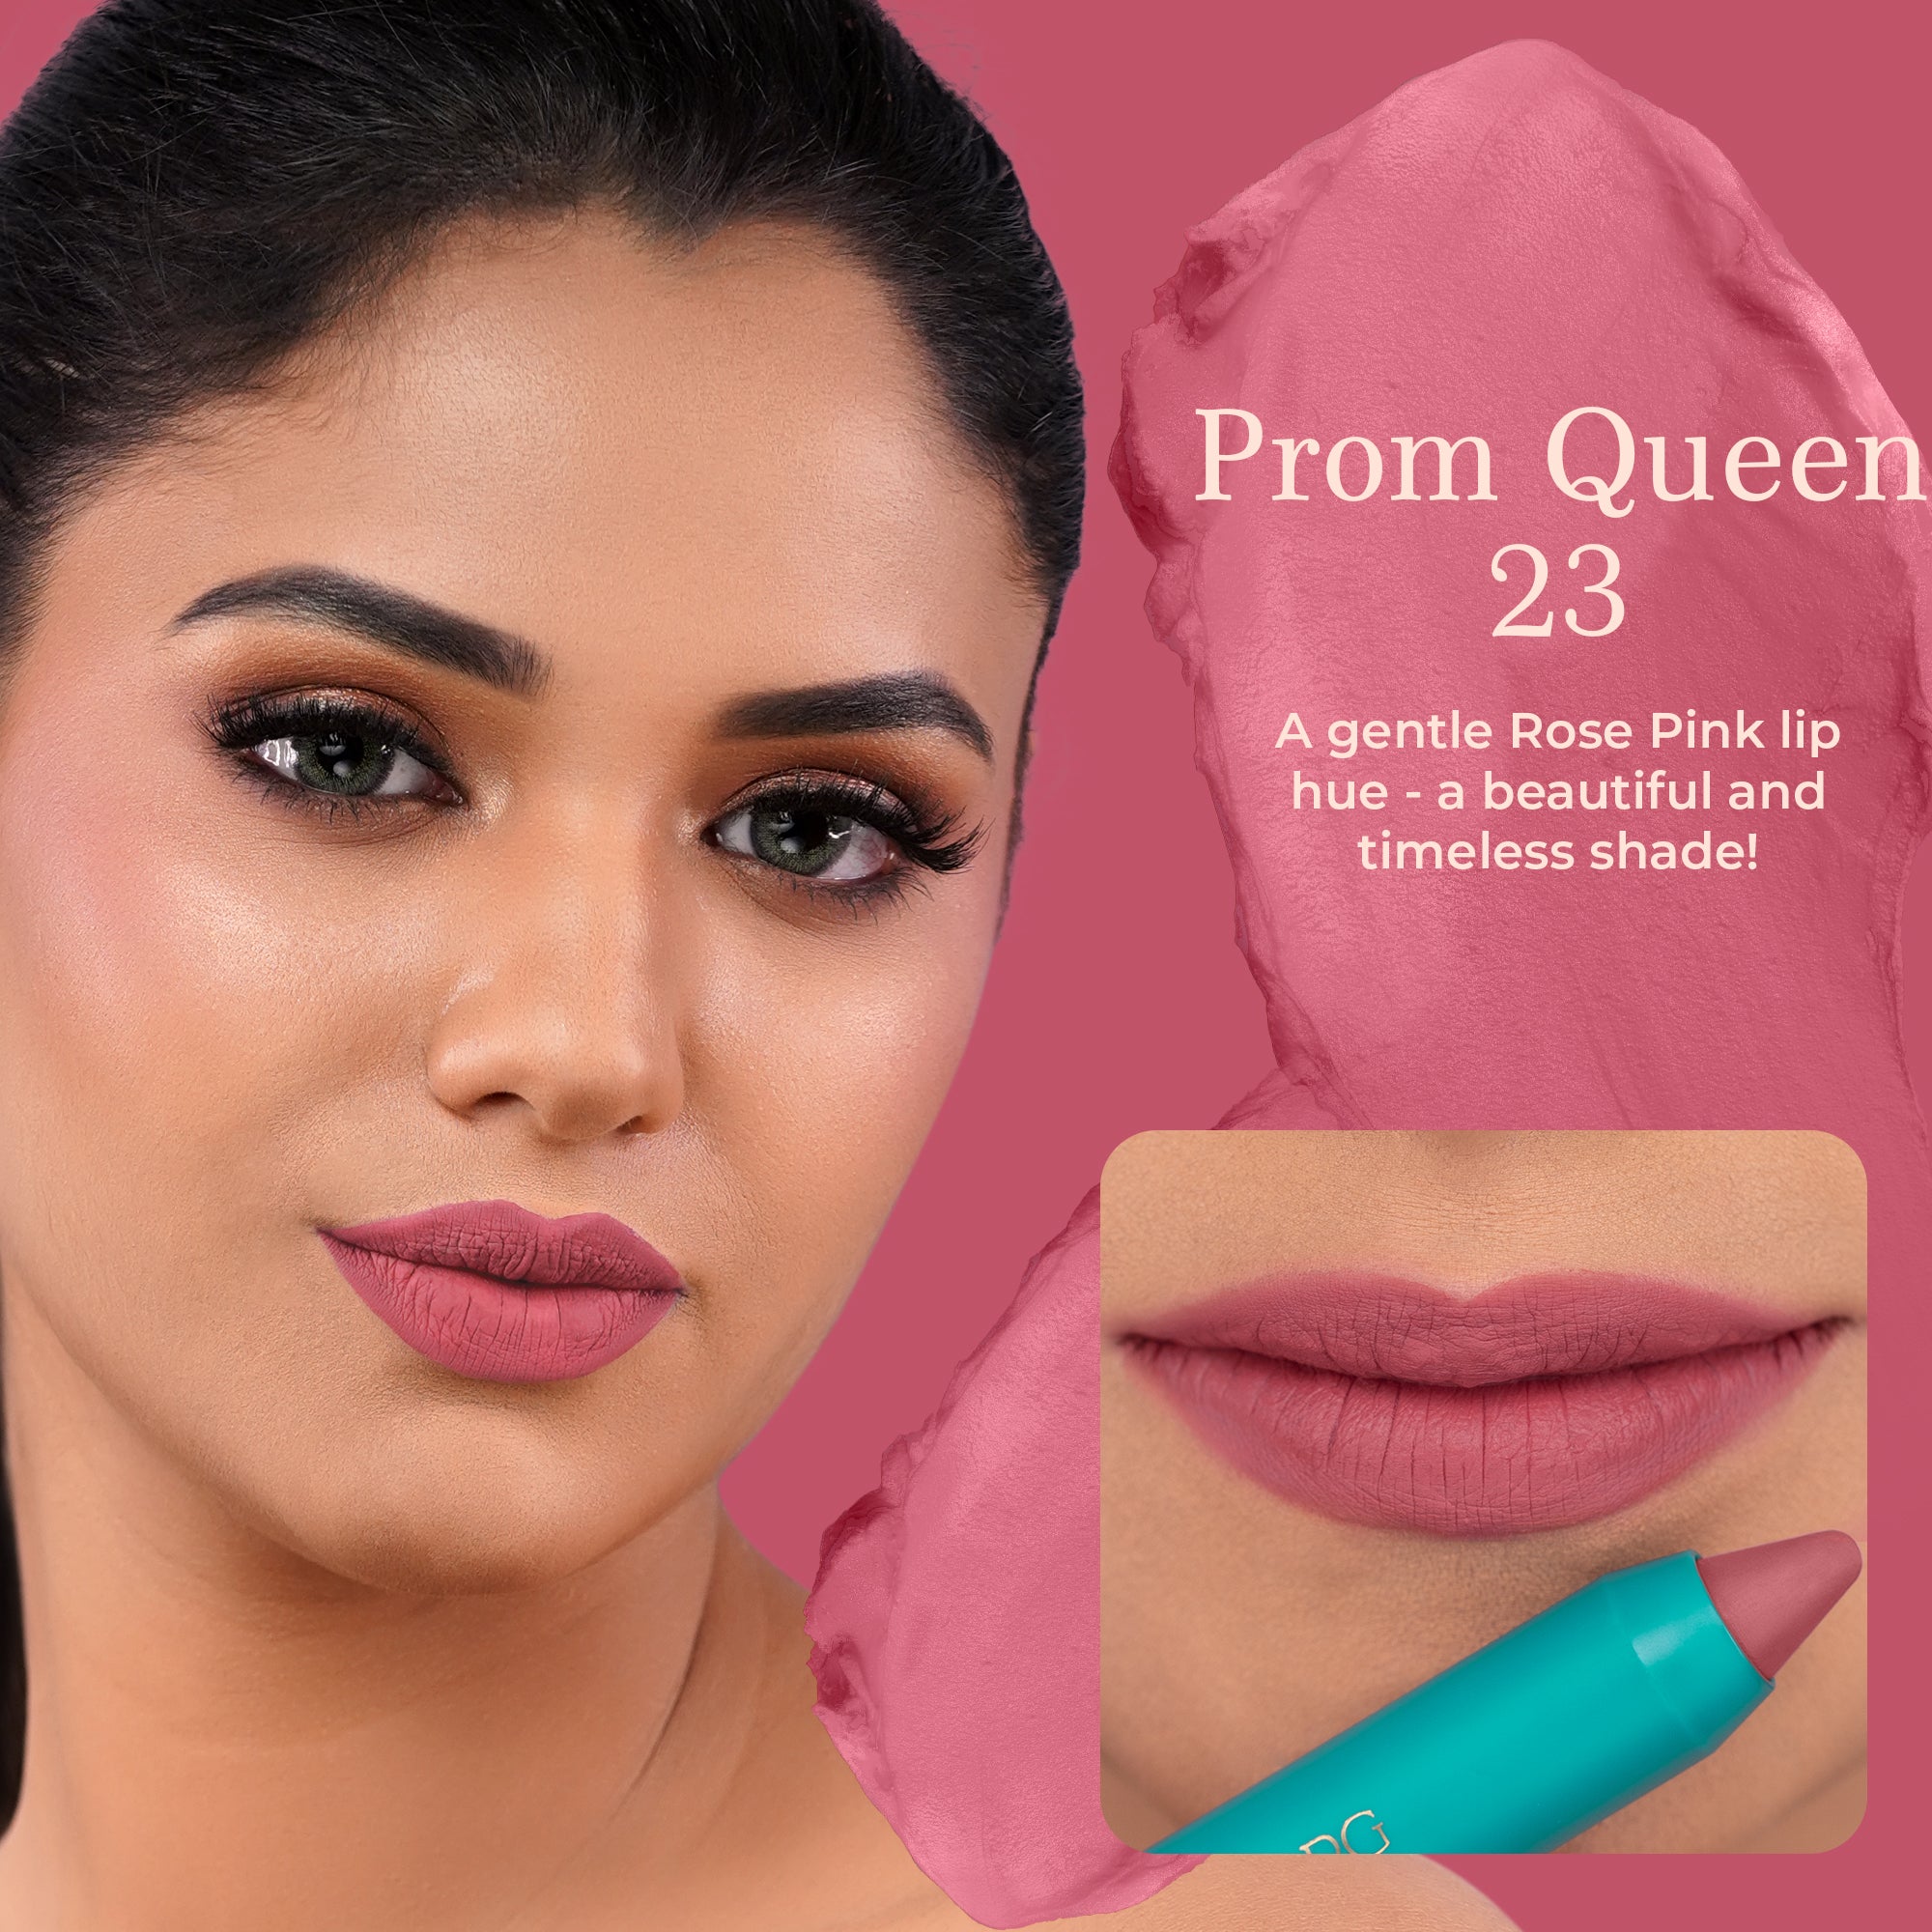 Day & Night Creamy Matte Lip Crayon Shade: Prom Queen 23